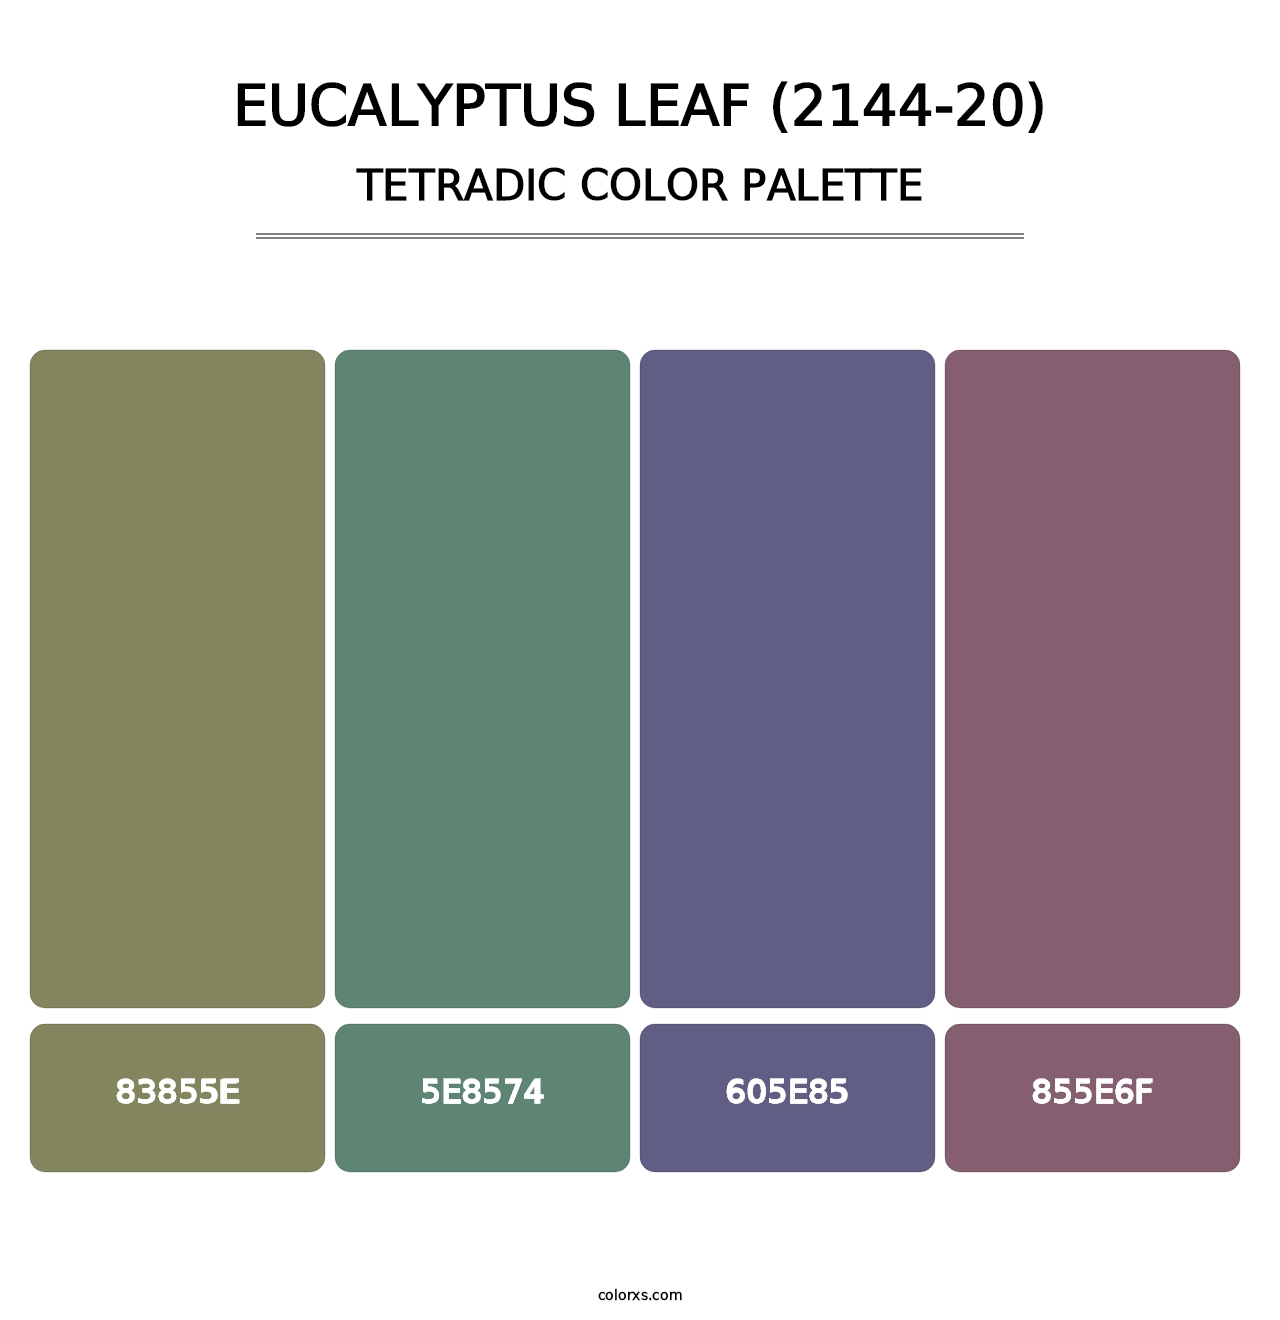 Eucalyptus Leaf (2144-20) - Tetradic Color Palette